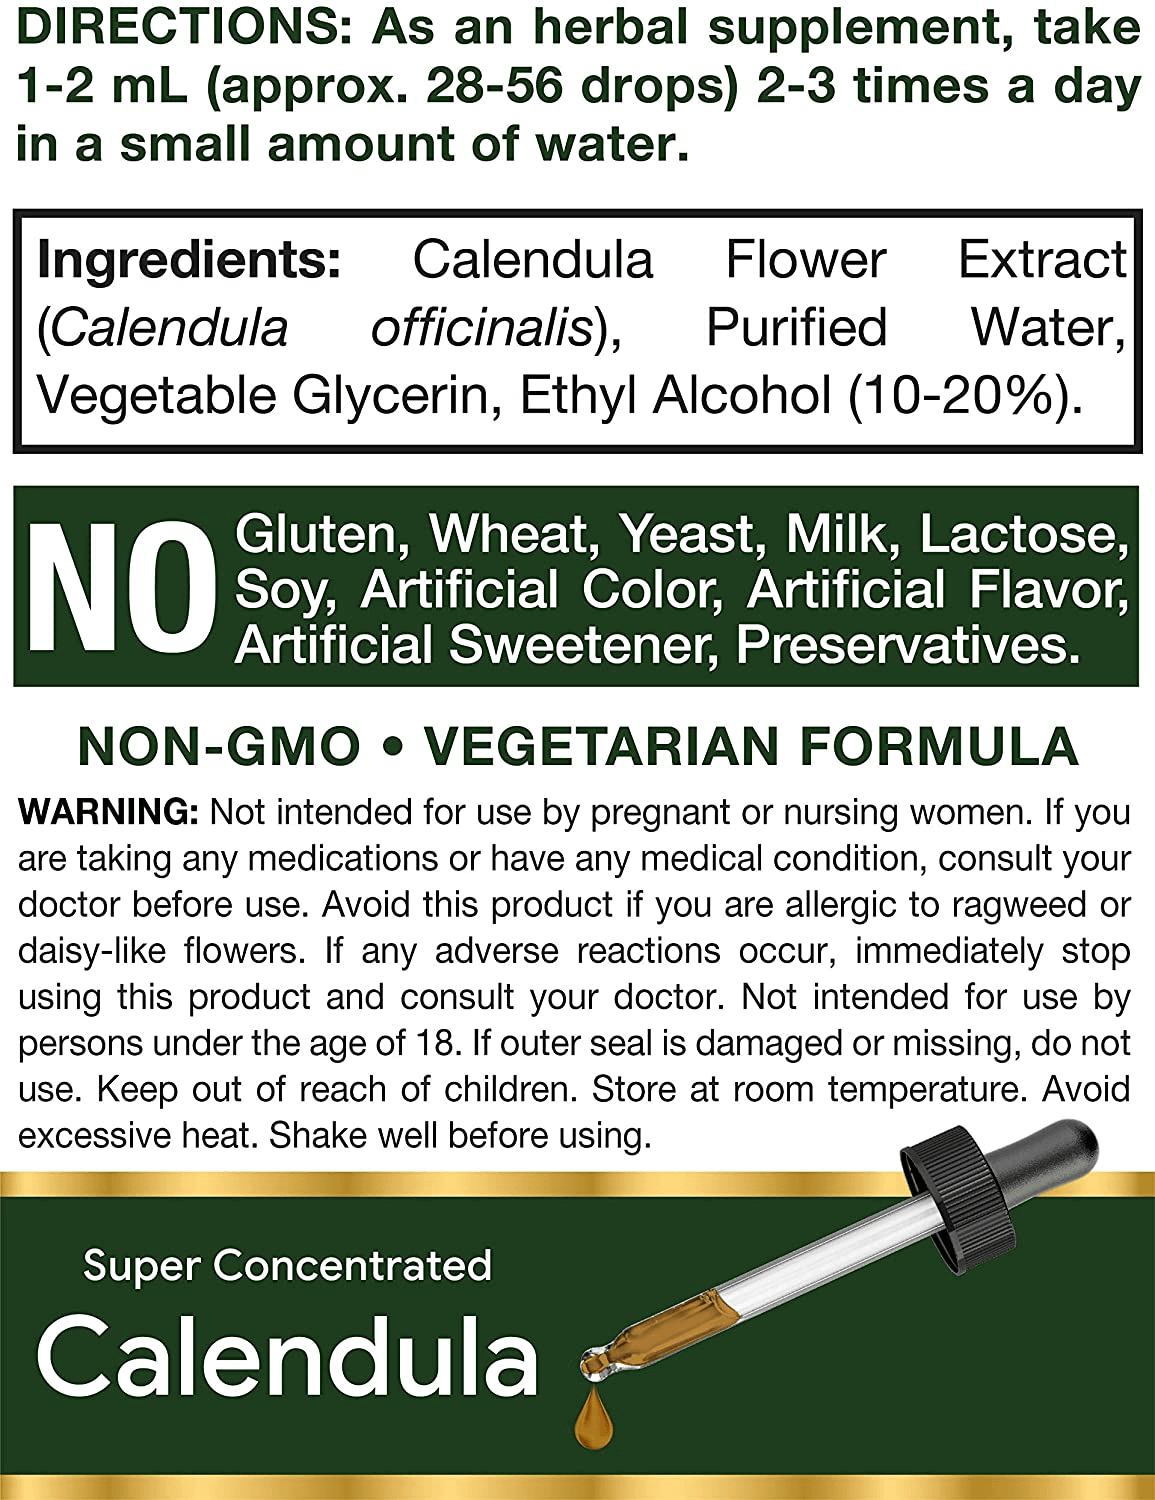 Calendula Extract Tincture | 2 Fl Oz | Low Alcohol | Vegetarian, Non-Gmo, Gluten Free Liquid Supplement | by Horbaach - vitamenstore.com